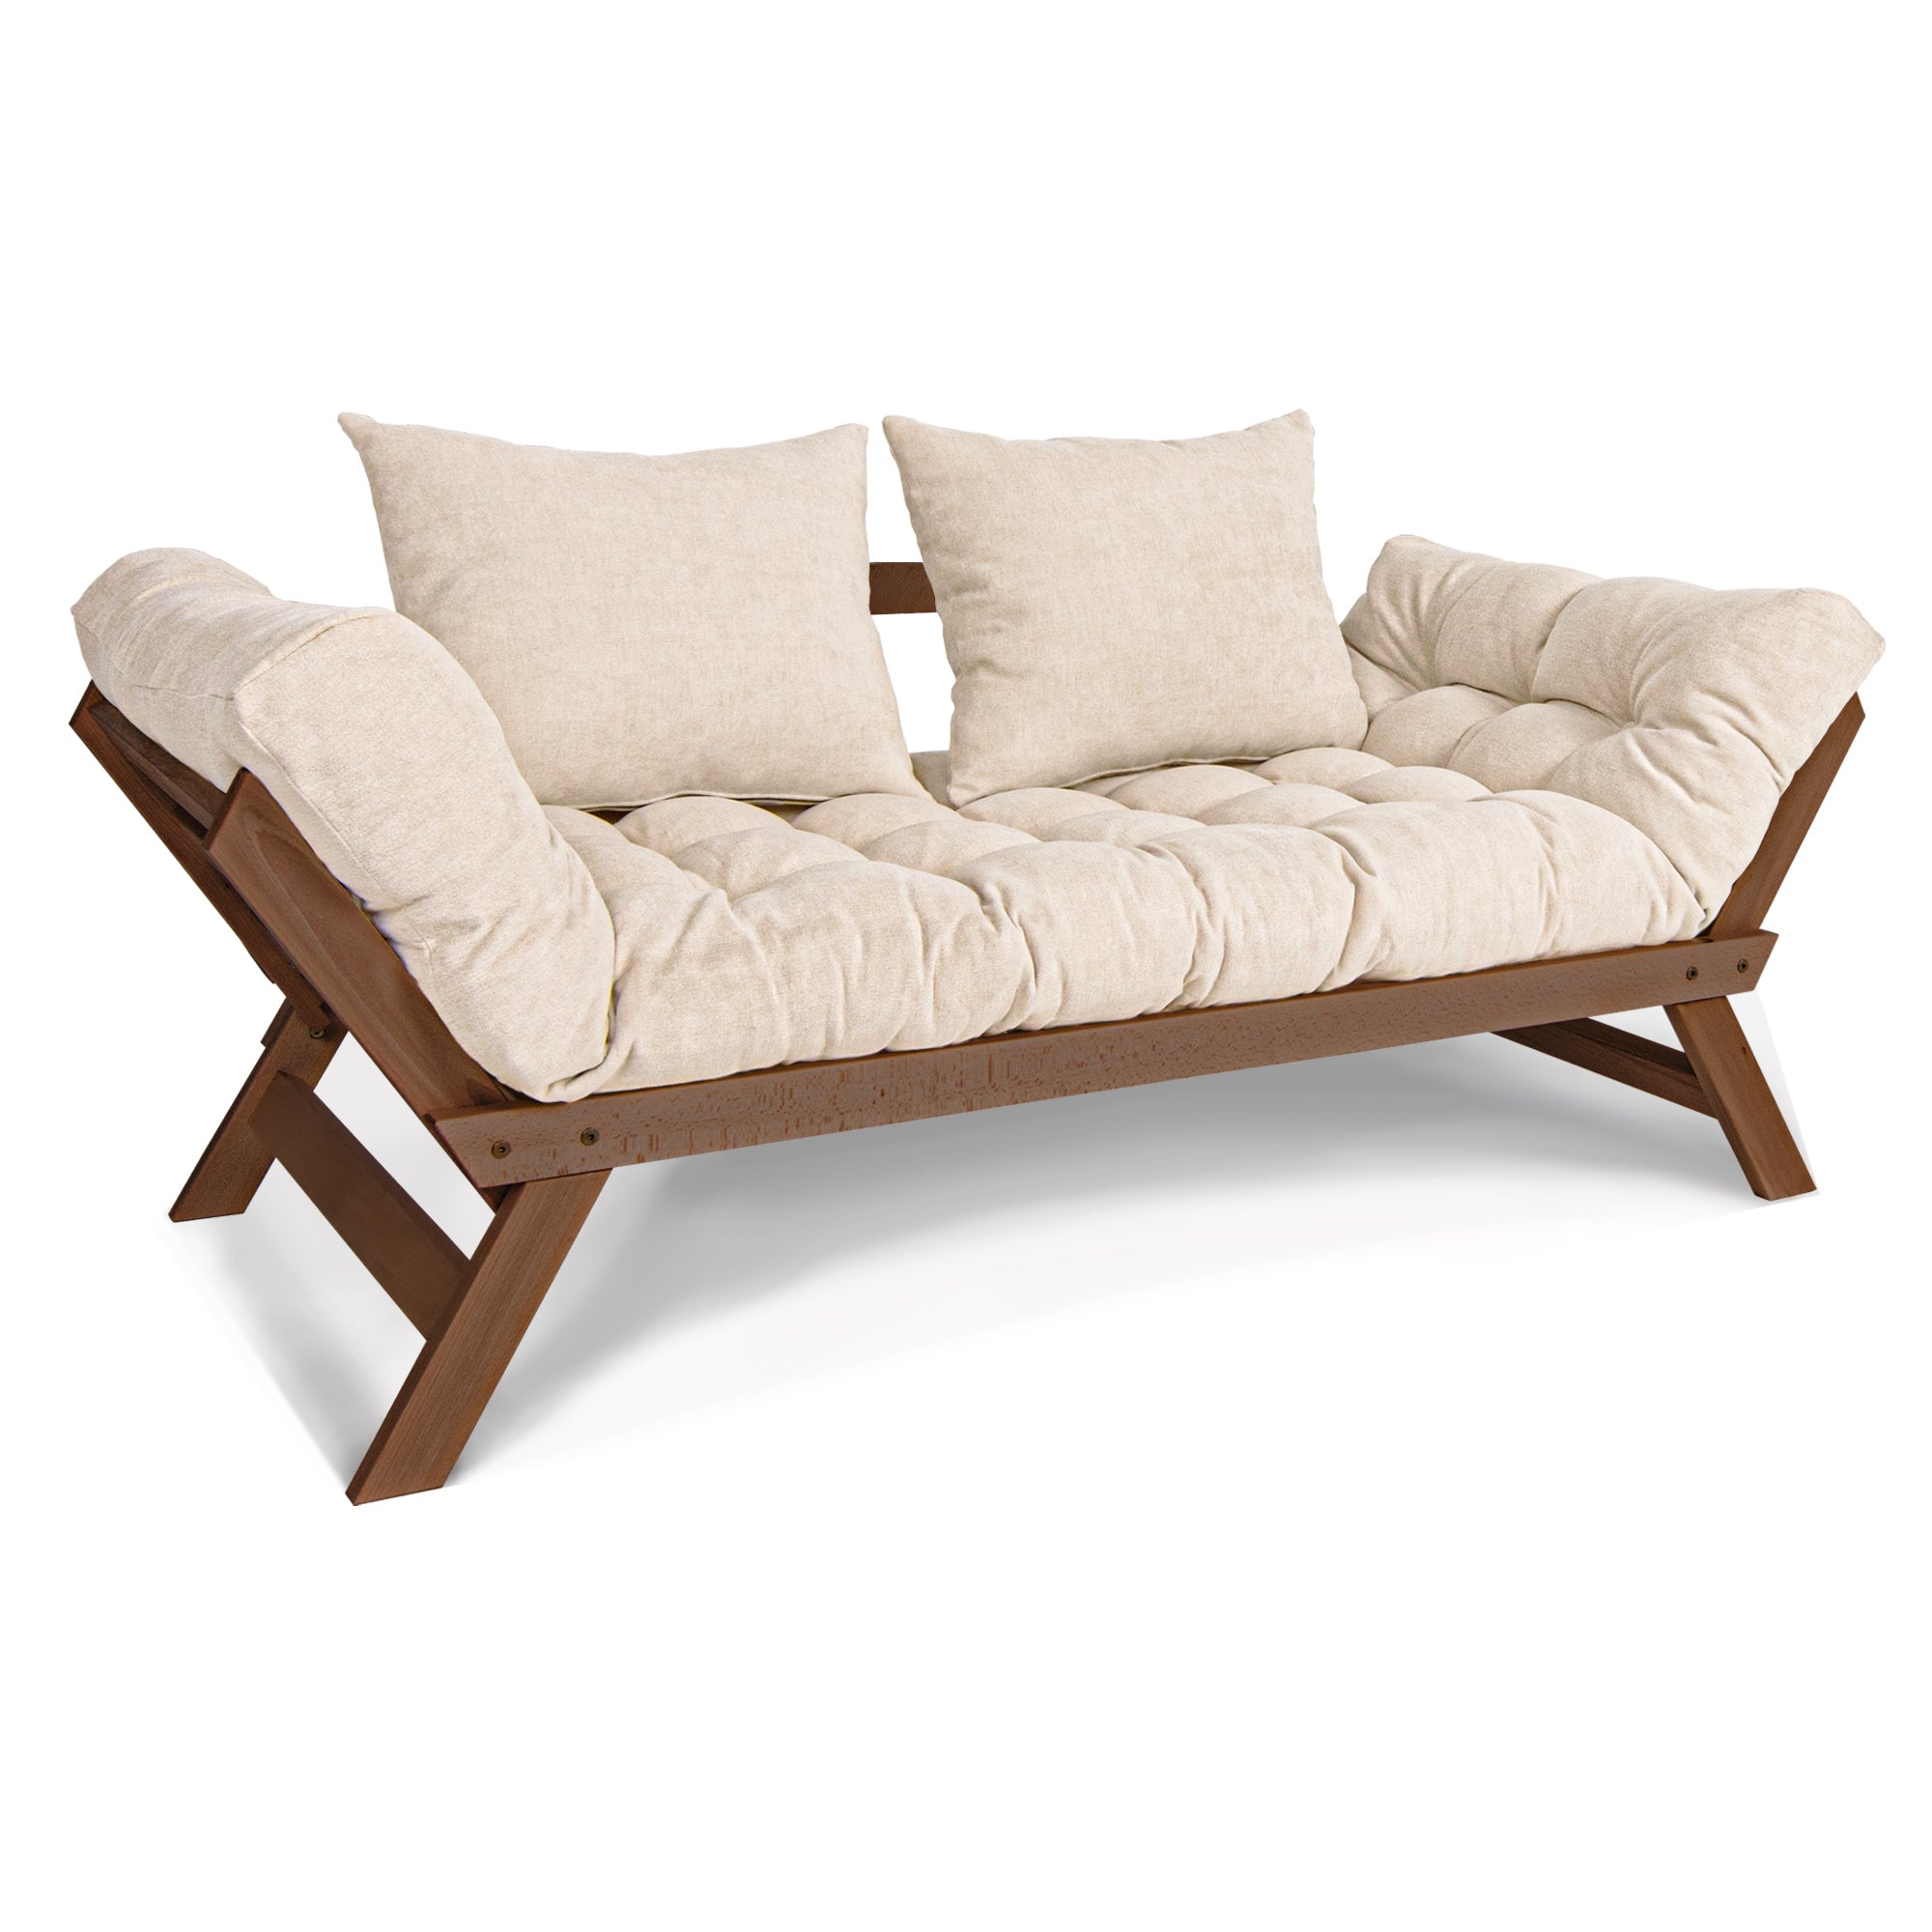 ALLEGRO Folding Sofa Bed, Beech Wood Frame, Walnut Colour upholstery creamy